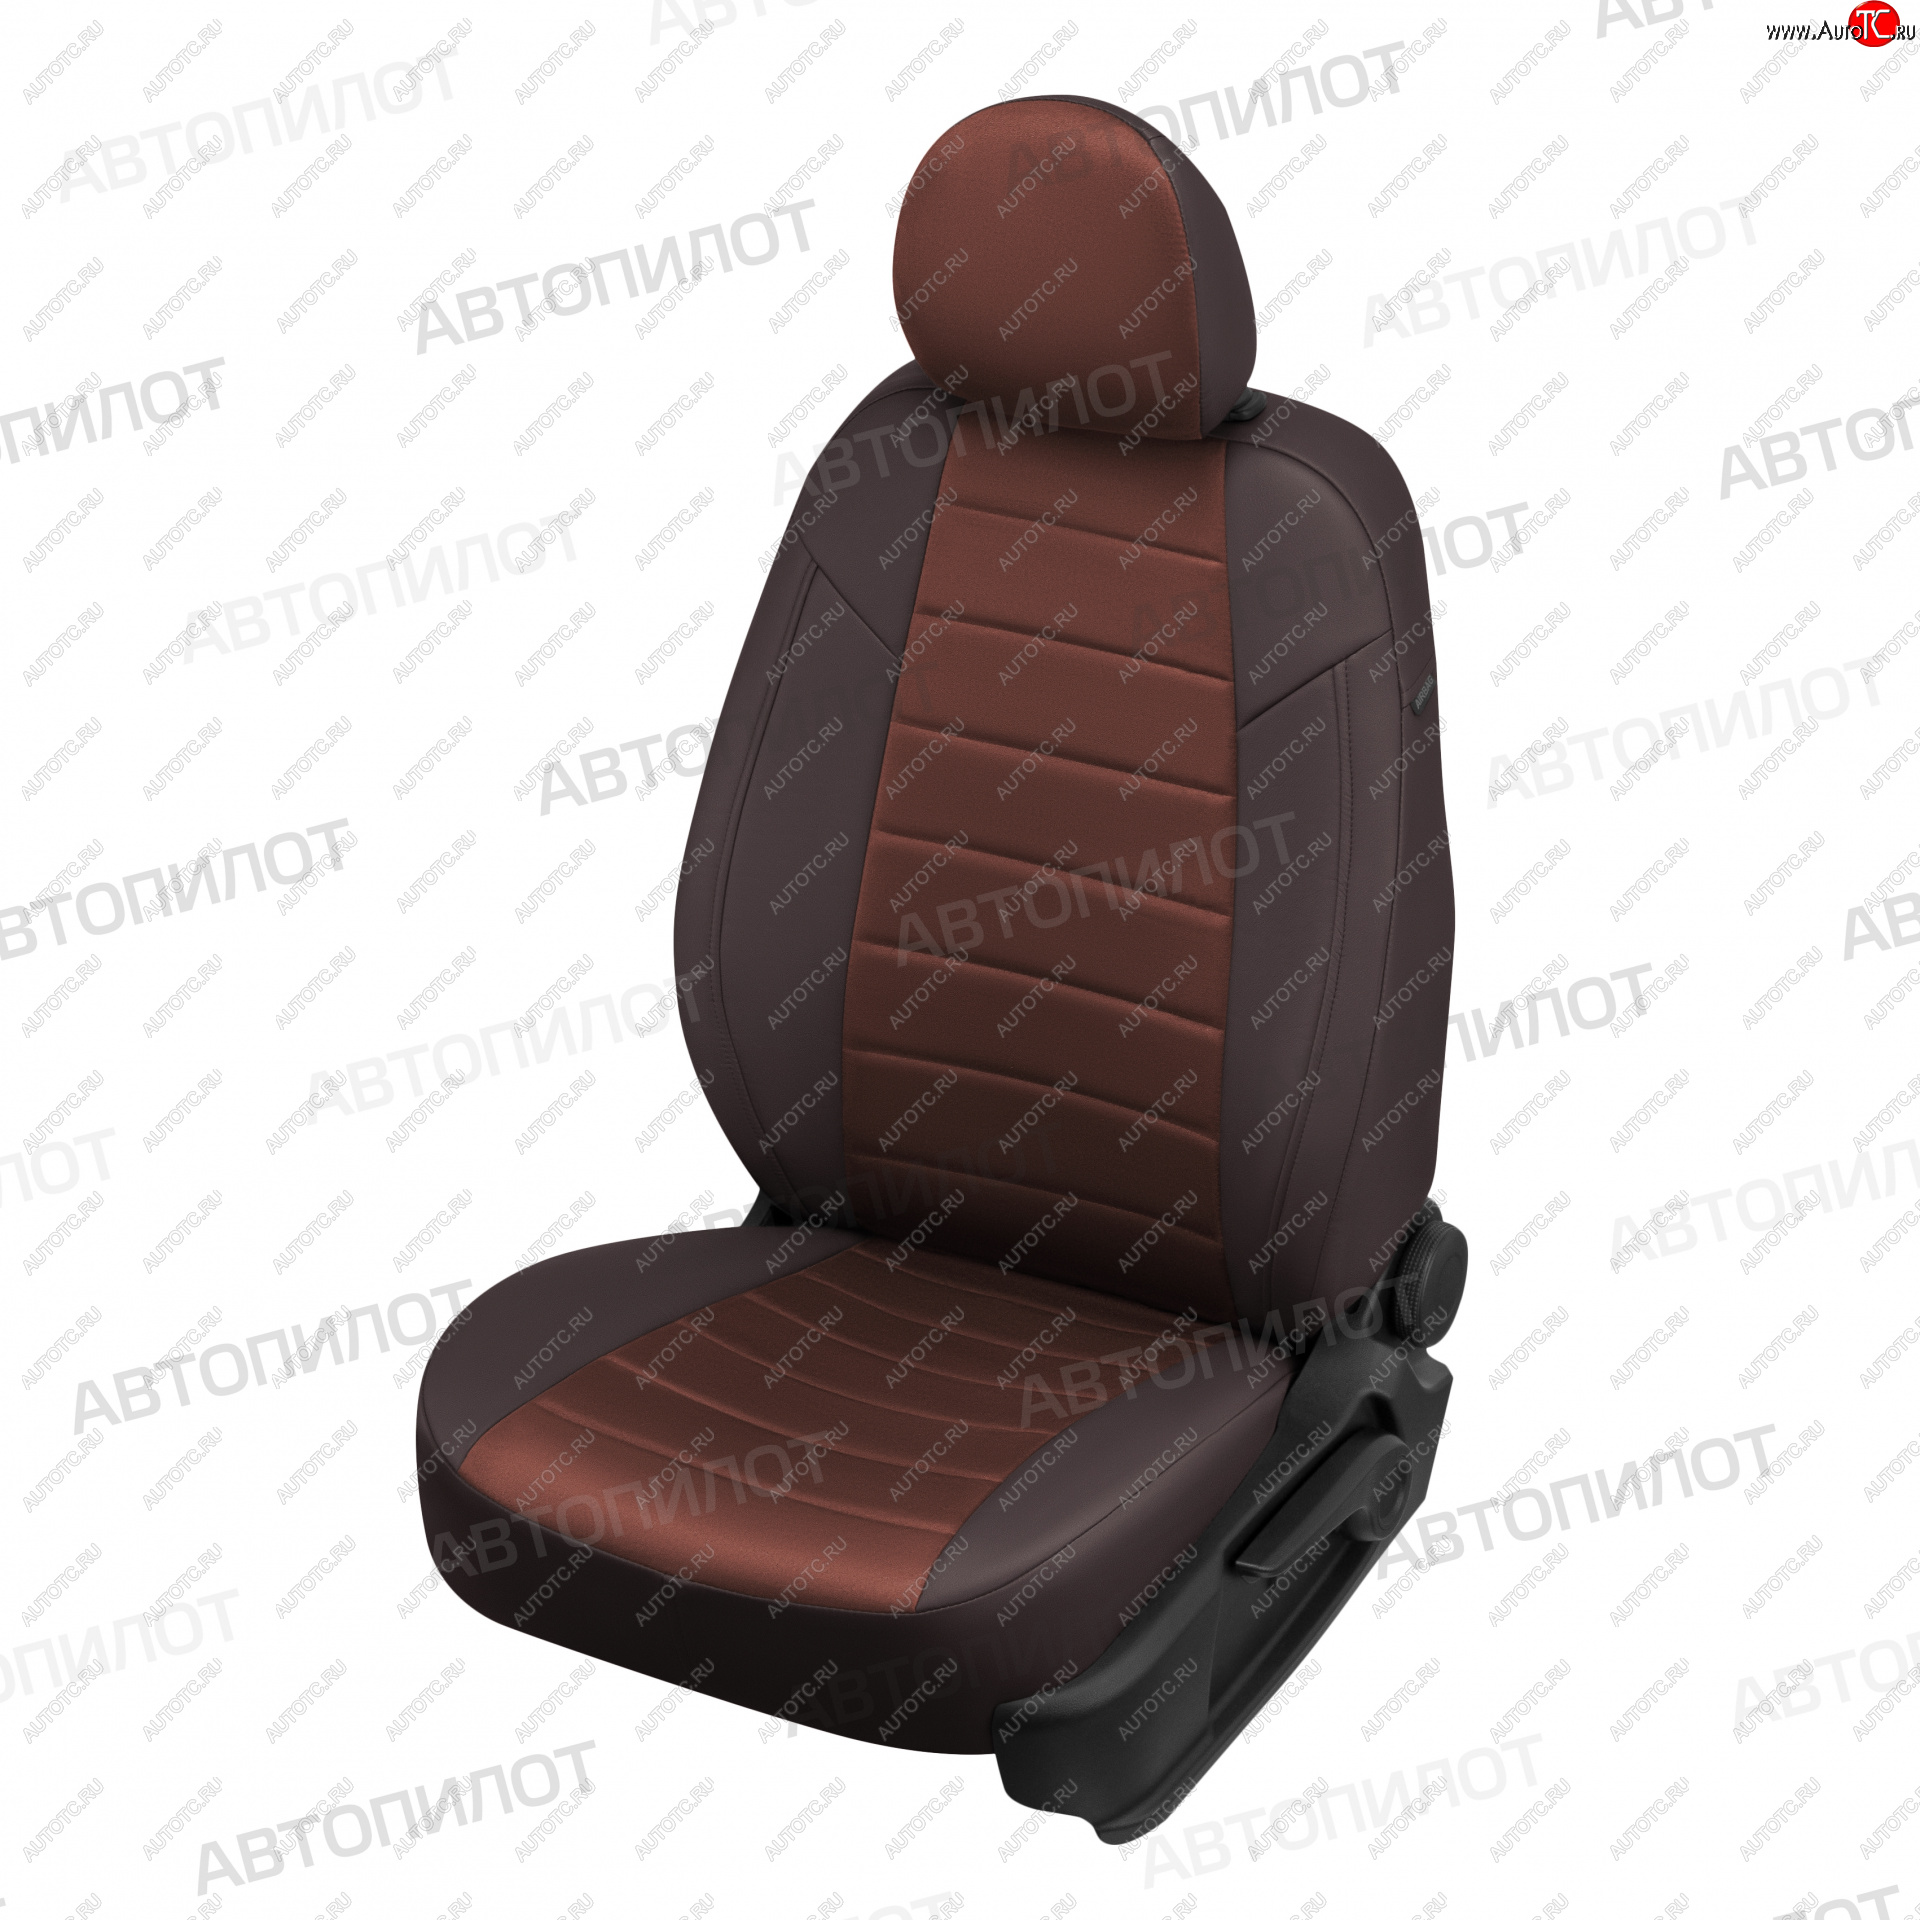 13 449 р. Чехлы сидений (экокожа/алькантара) Автопилот  Hyundai Santa Fe  1 (2000-2012) (шоколад)